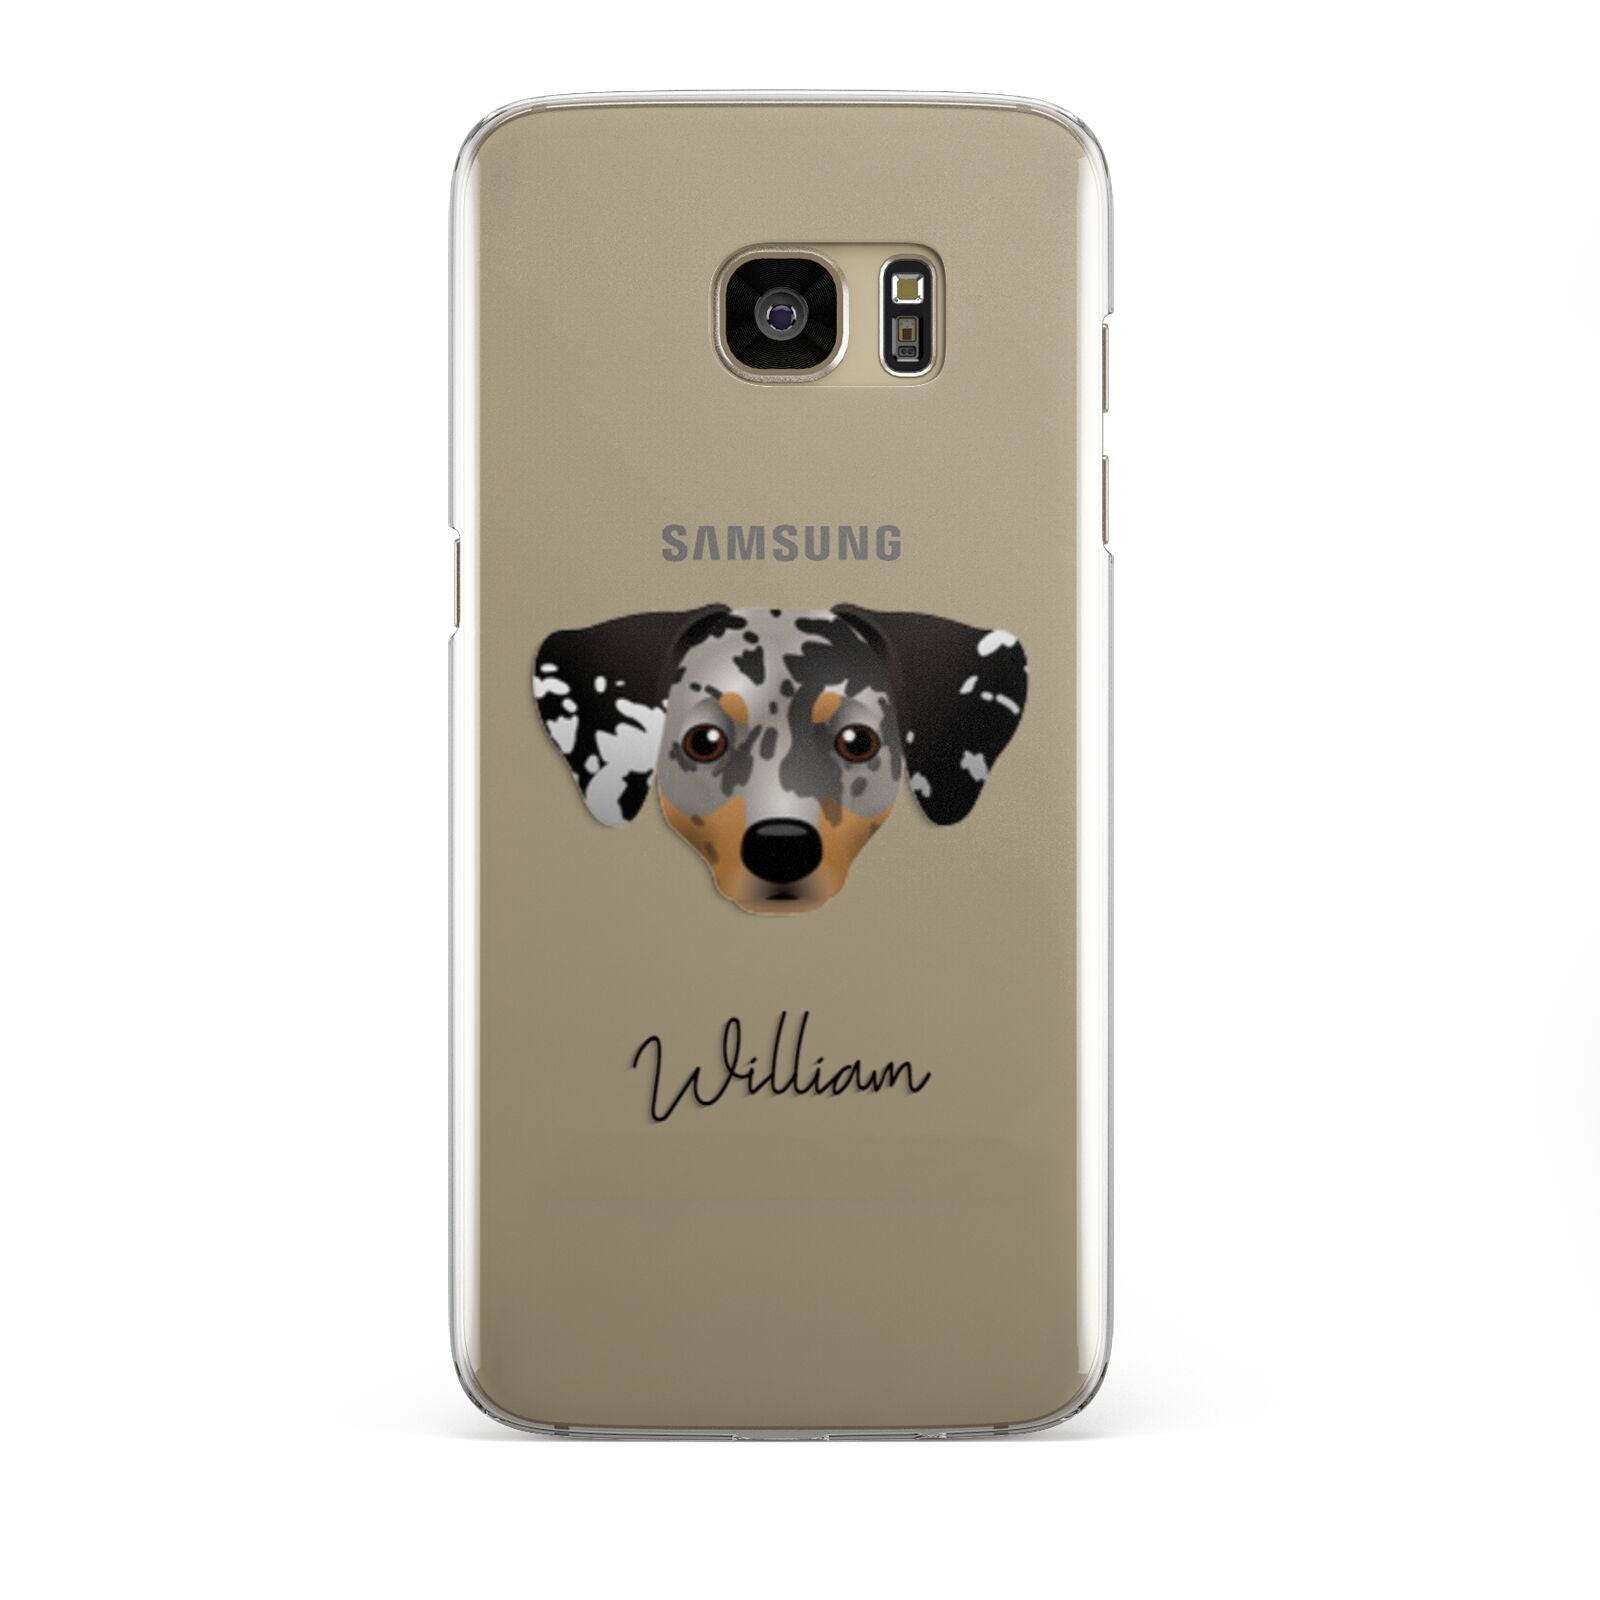 Chiweenie Personalised Samsung Galaxy S7 Edge Case